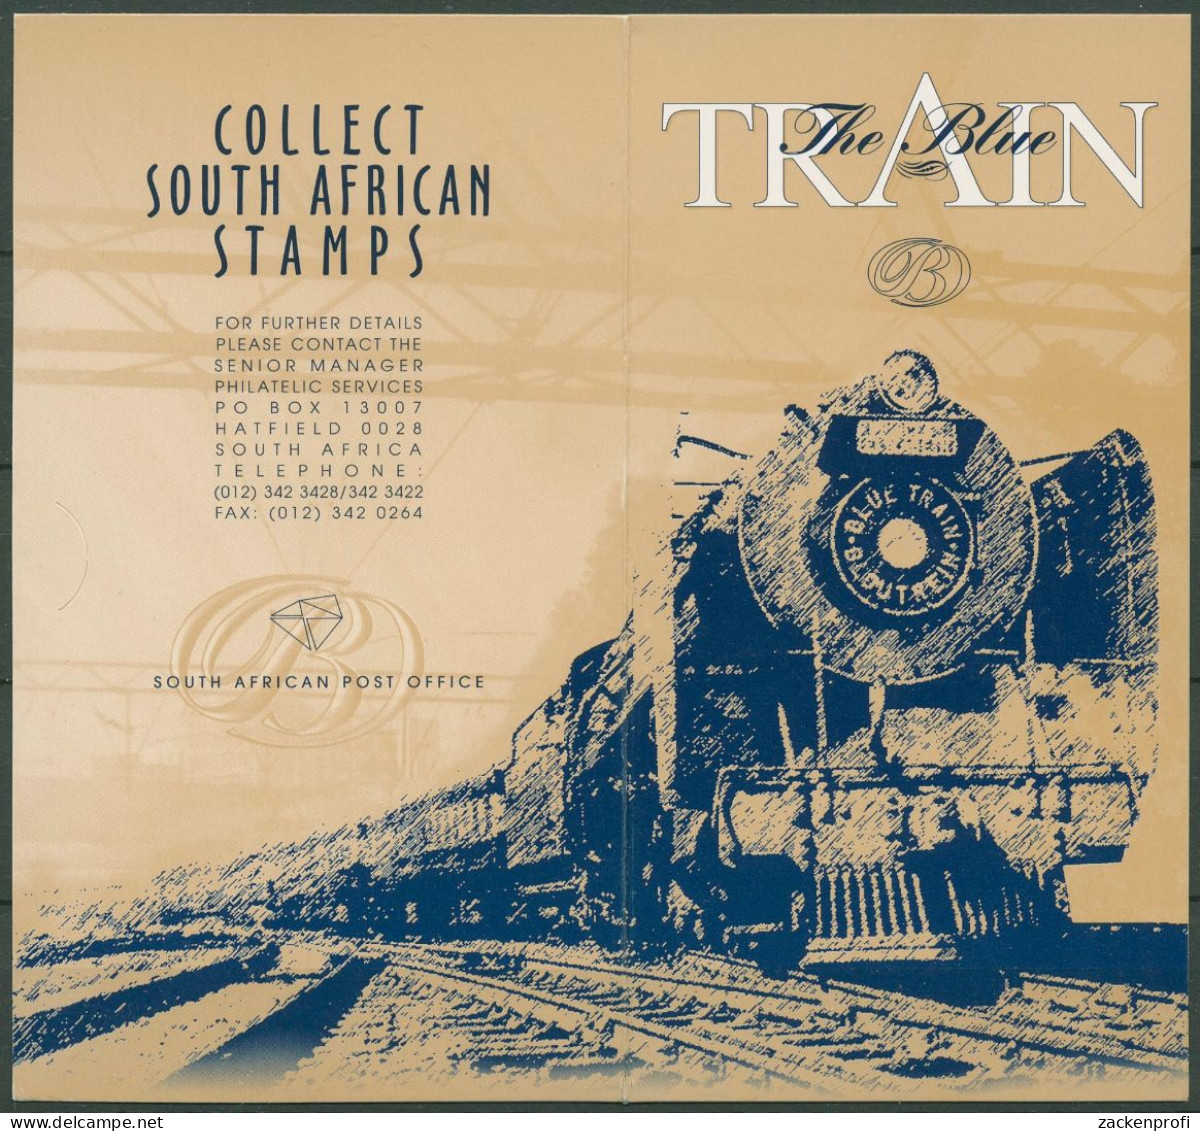 Südafrika 1997 Eisenbahn Der Blaue Zug 1074/78 A MH Postfrisch (C40613) - Carnets